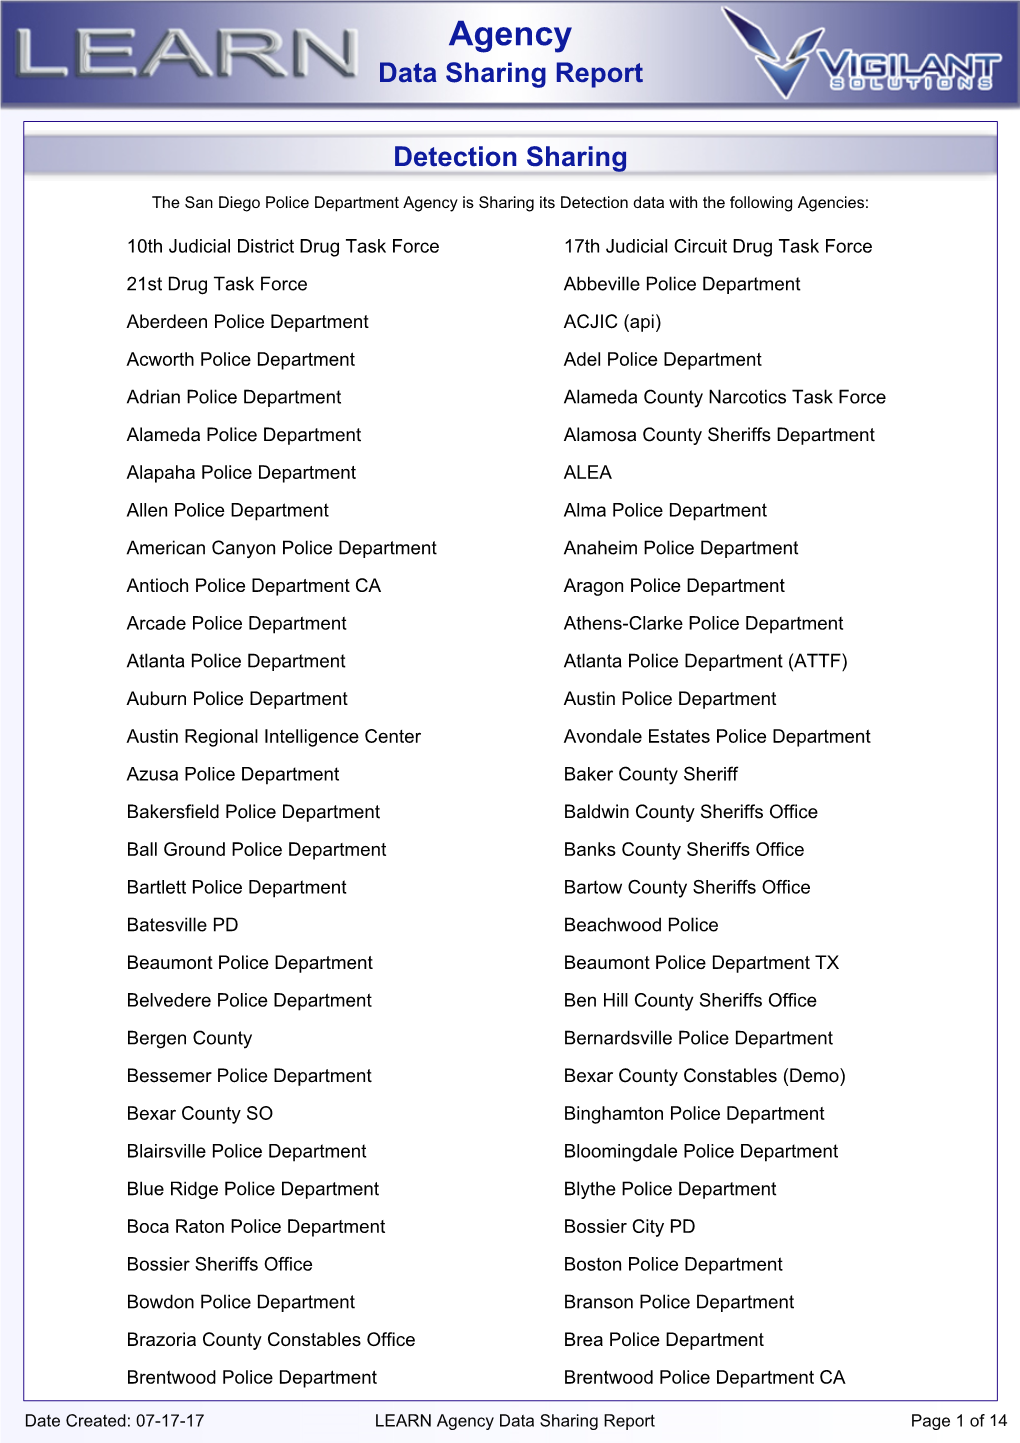 List of Agencies